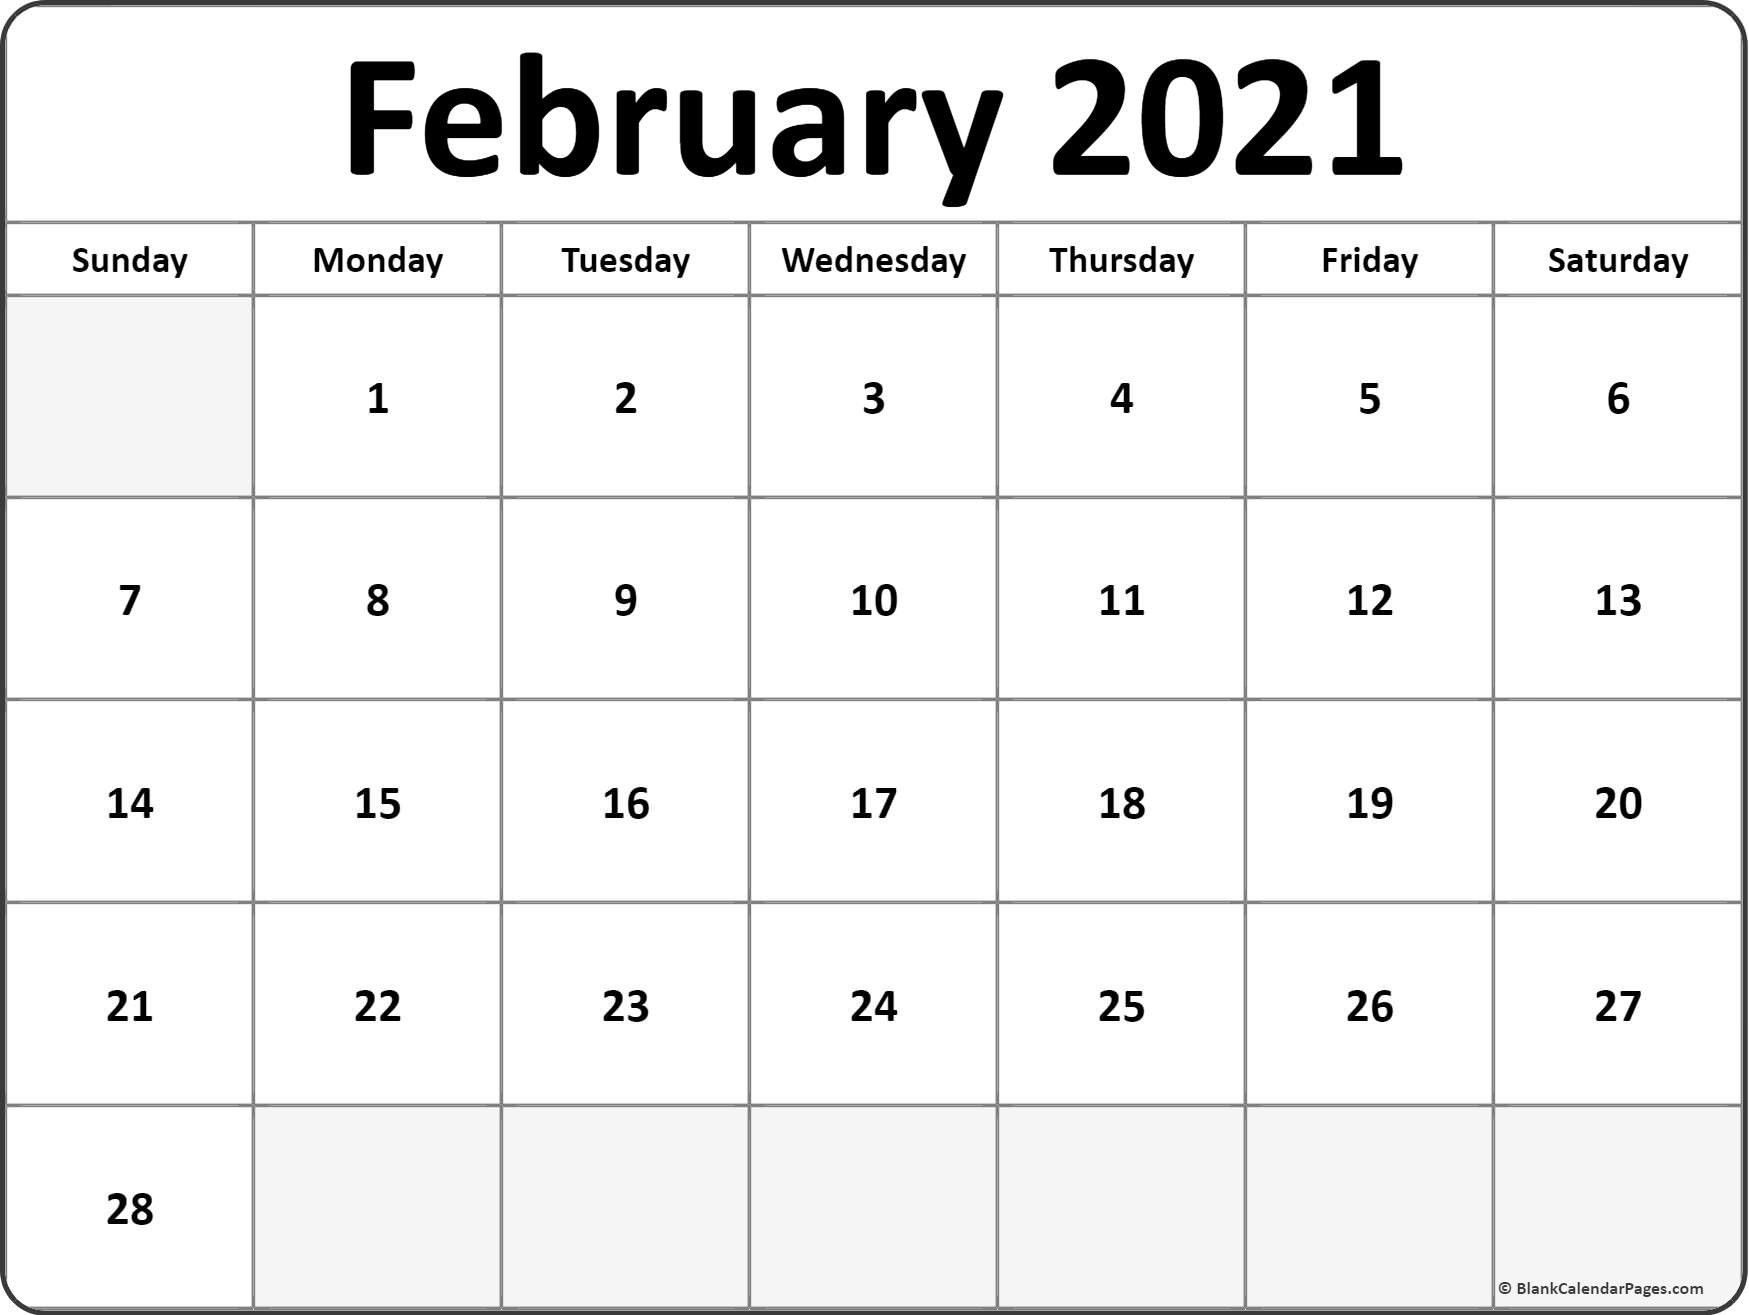 February 2021 Calendar Wallpapers Wallpaper Cave